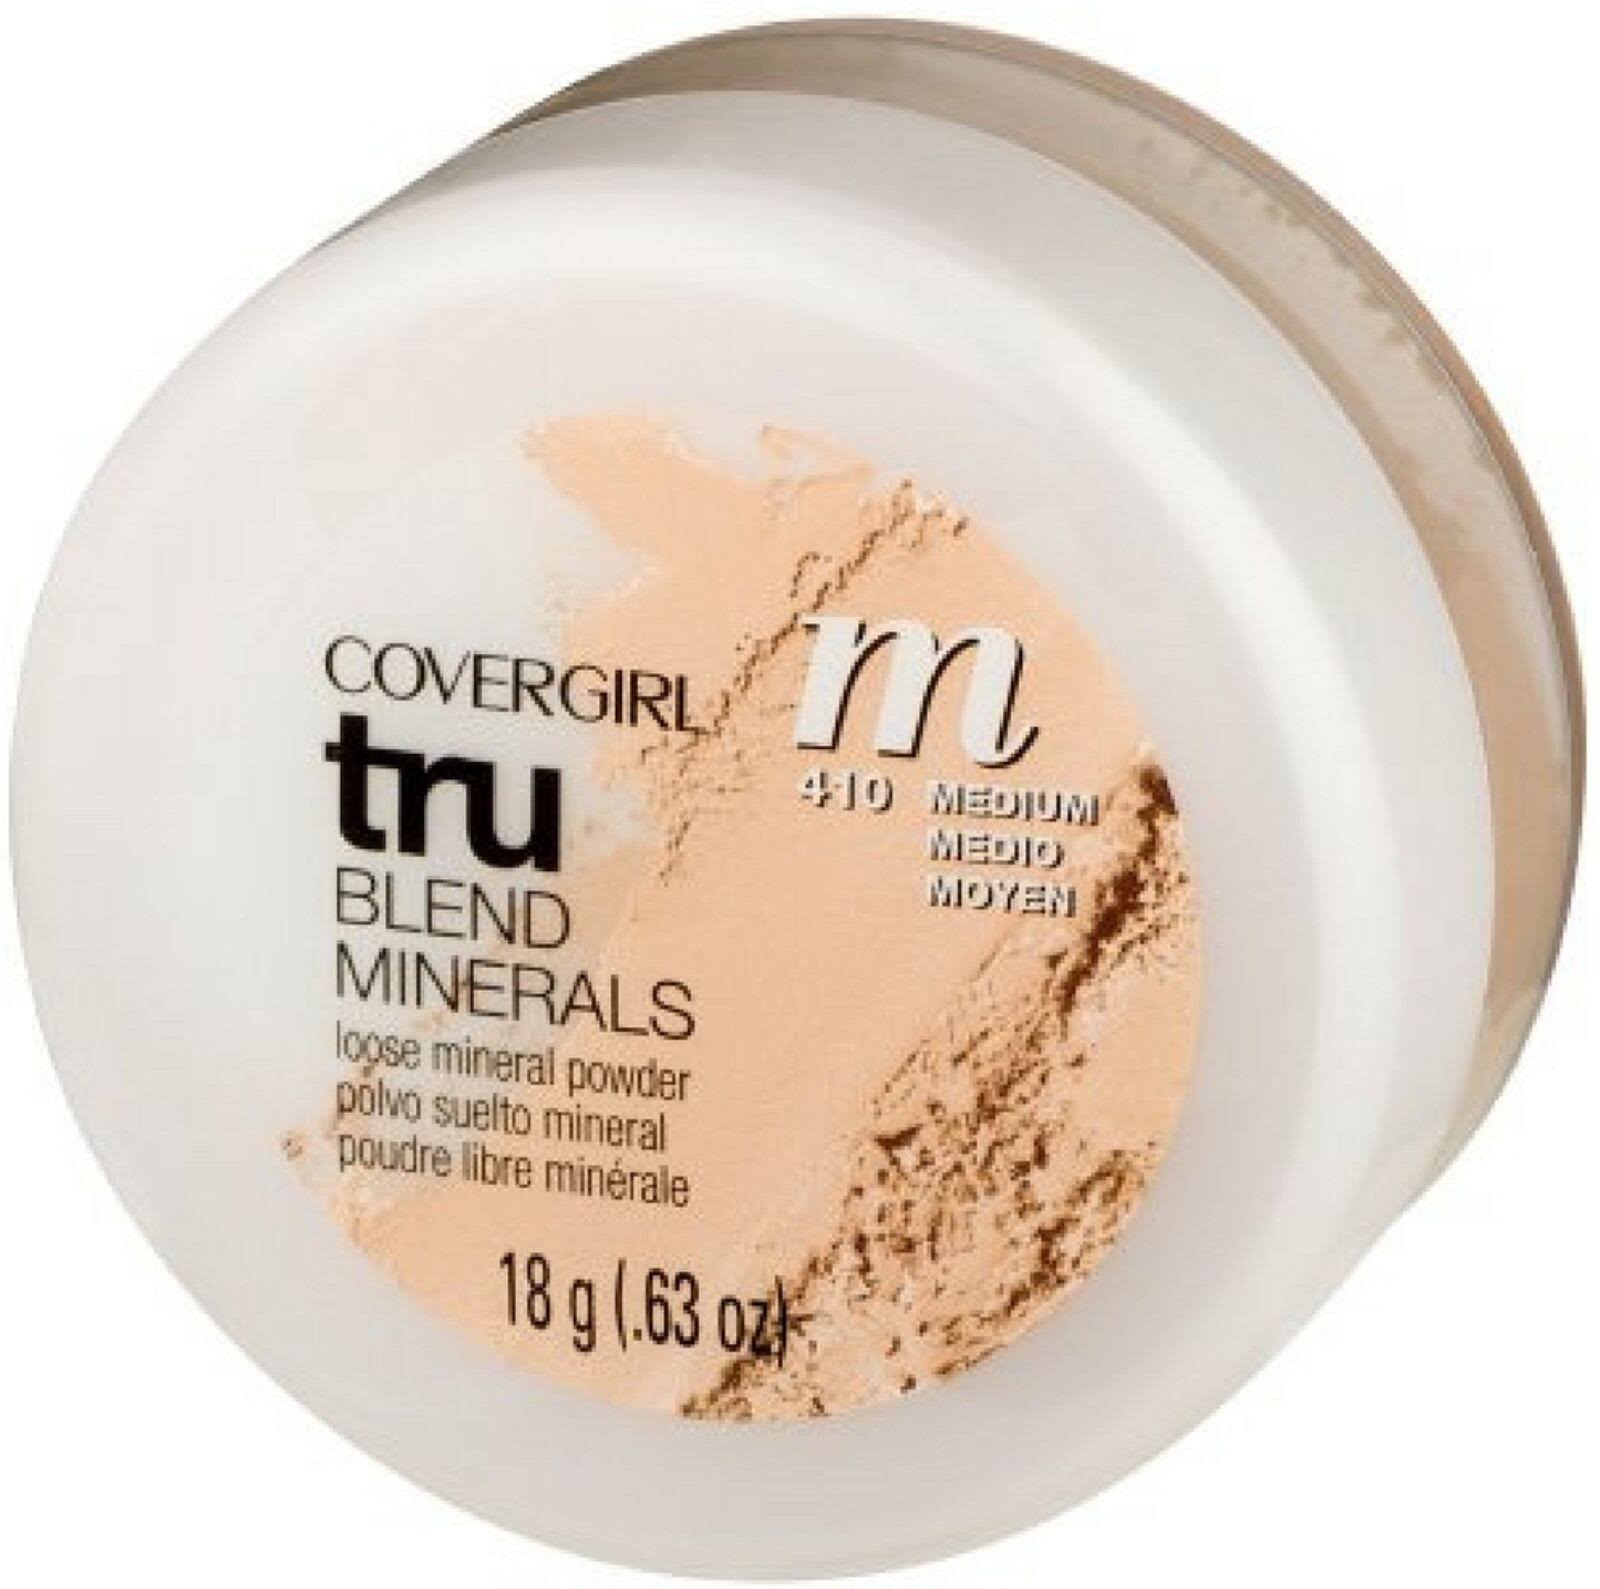 CoverGirl TruBlend Minerals Loose Powder Make Up - Medium, 0.63oz